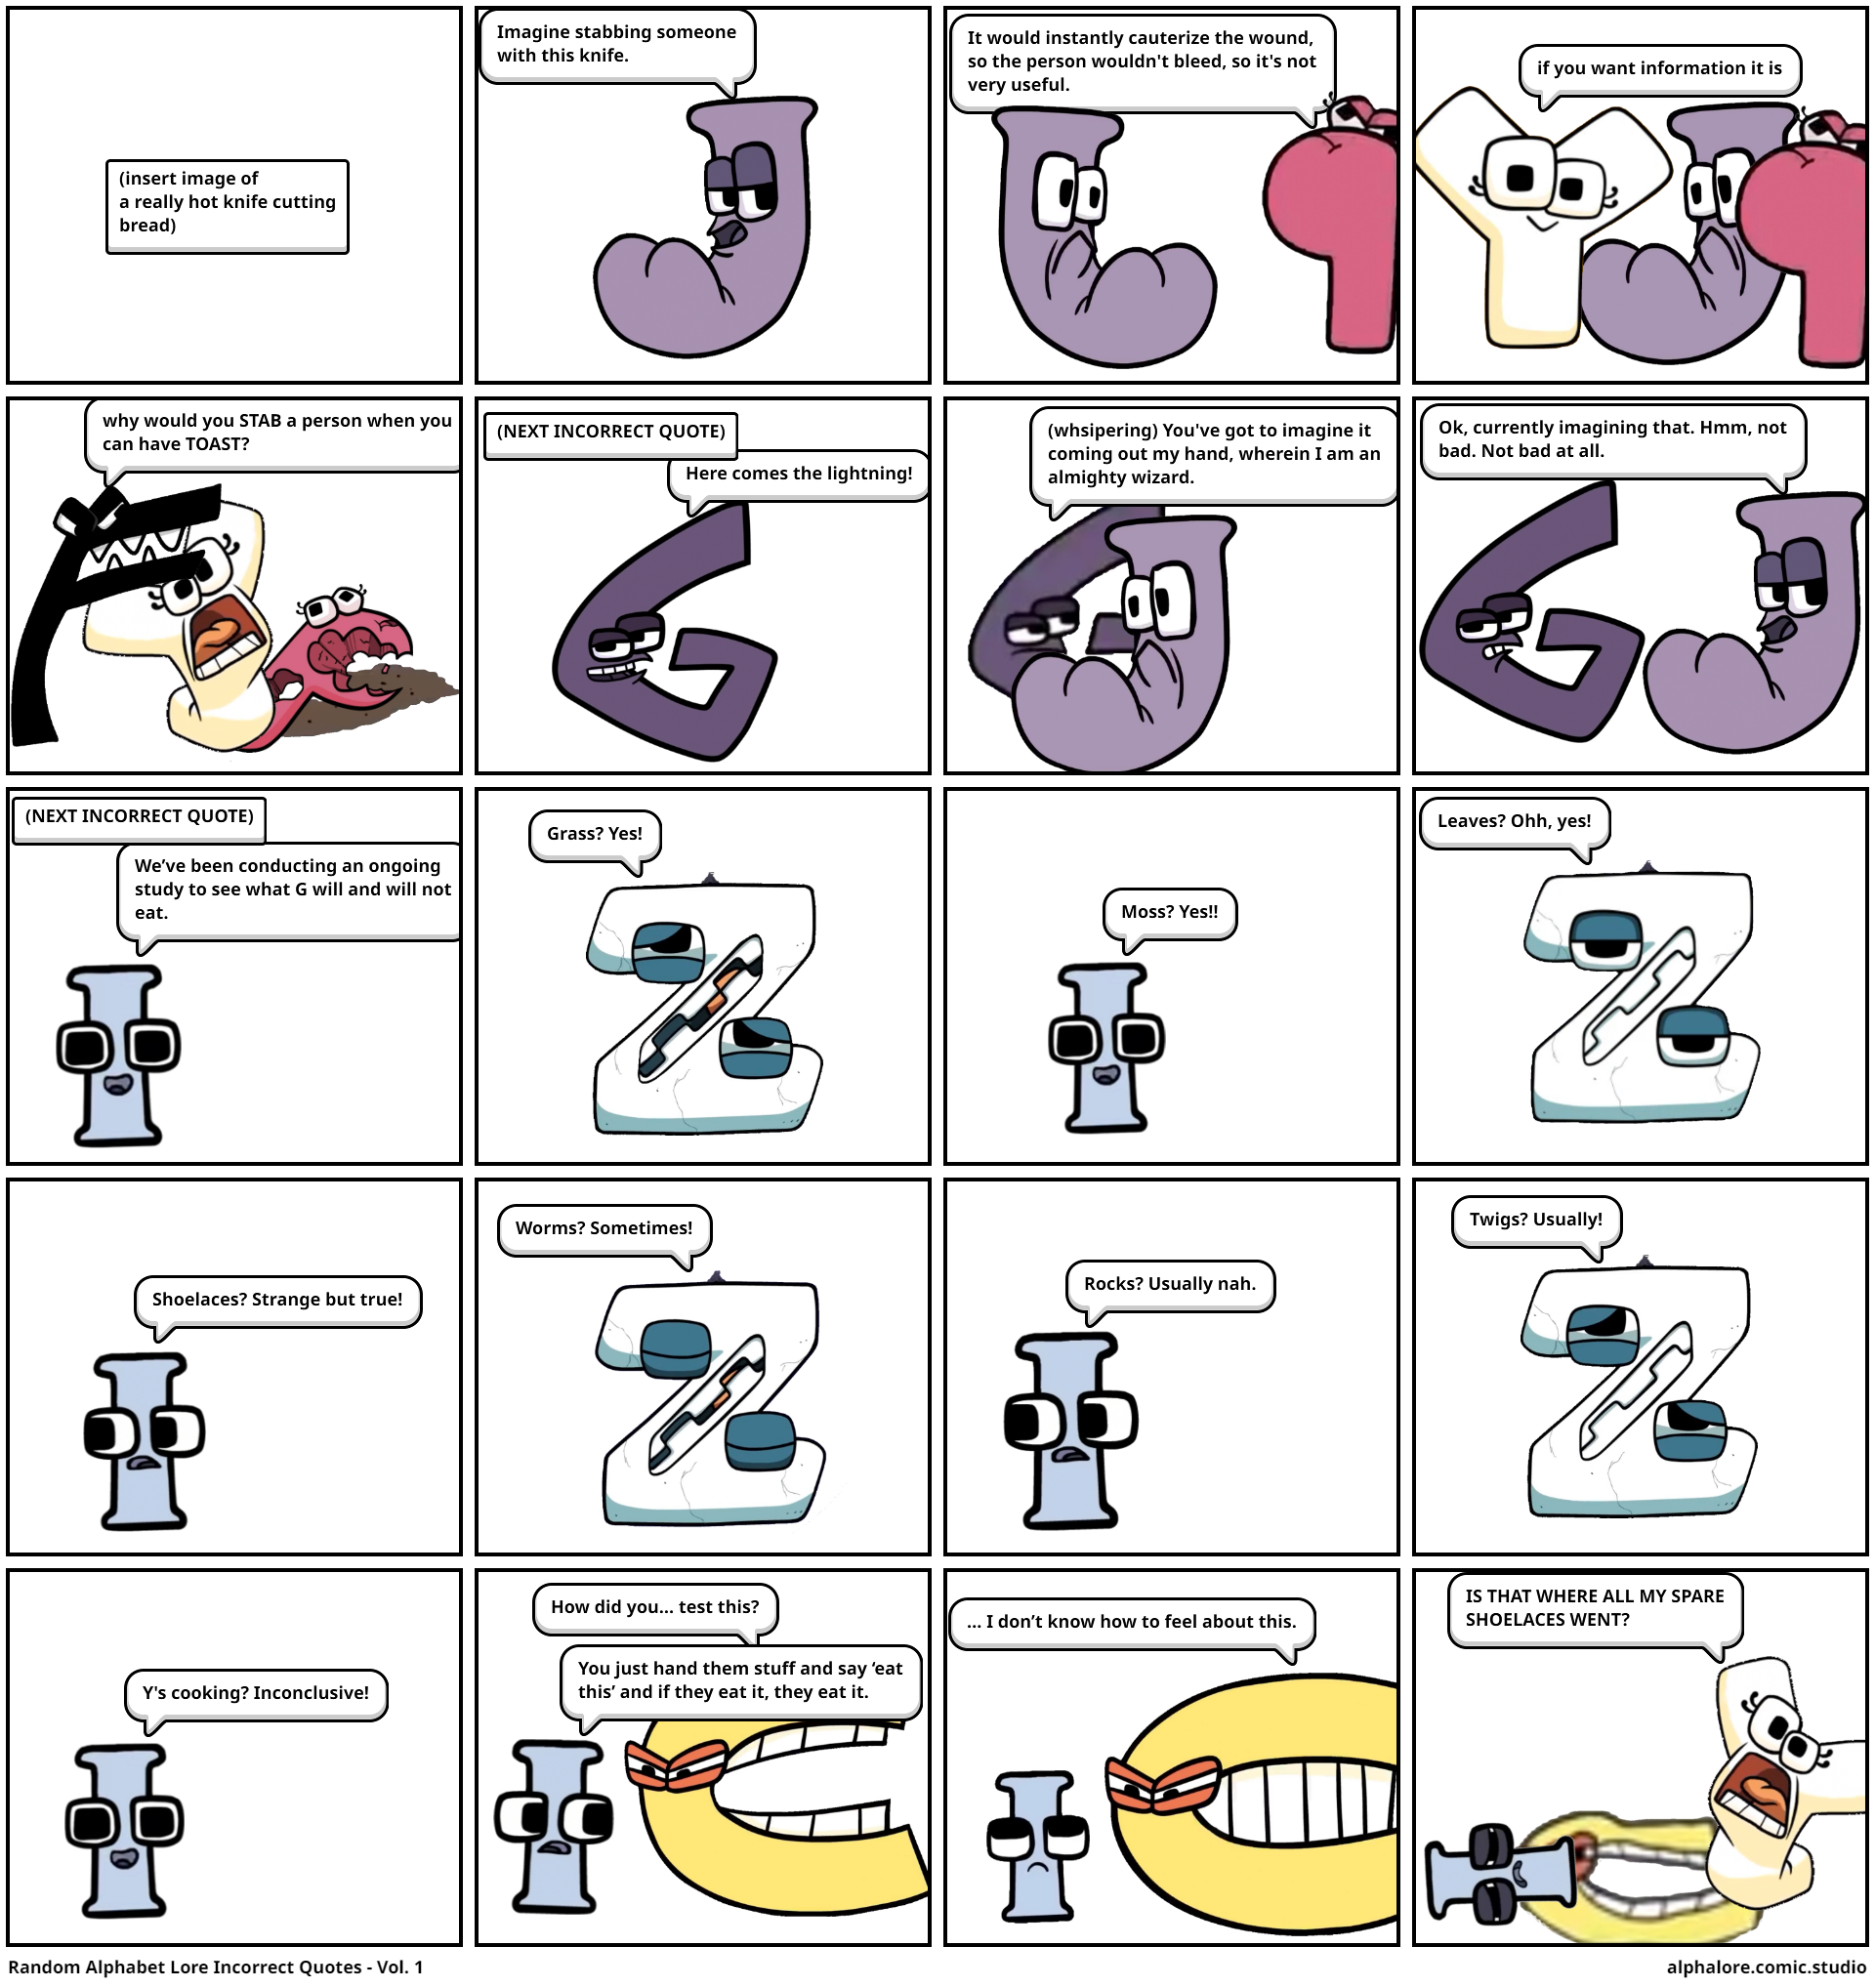 random stuff you can do with alphabet lore letters - Comic Studio